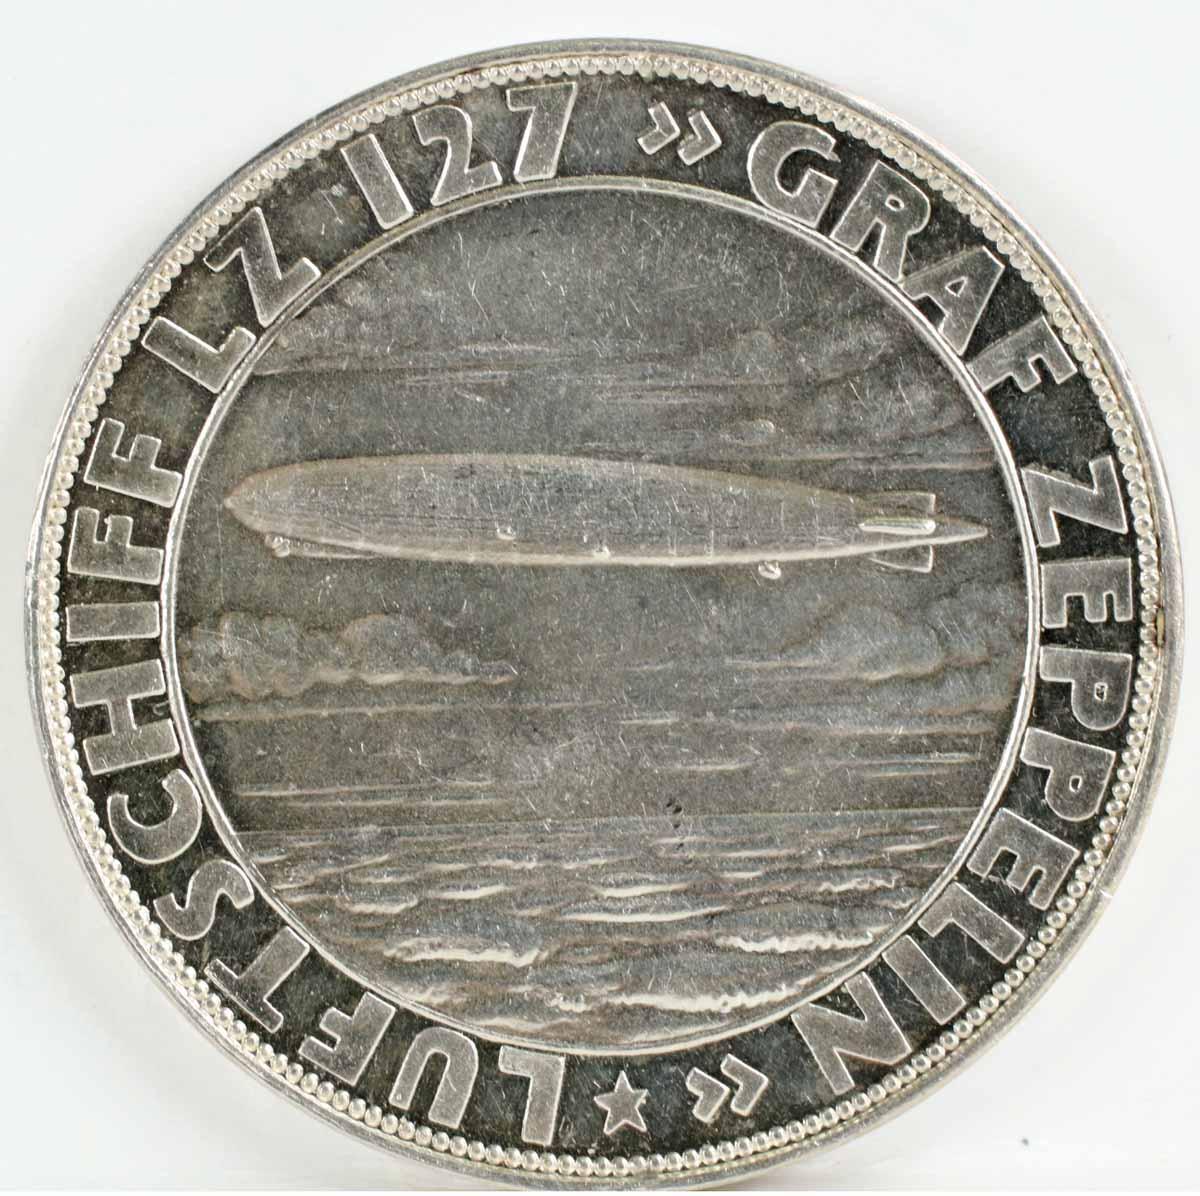 Graf Zeppelin 1898-1928 Silver Commemorative Medal, Ca. 1929